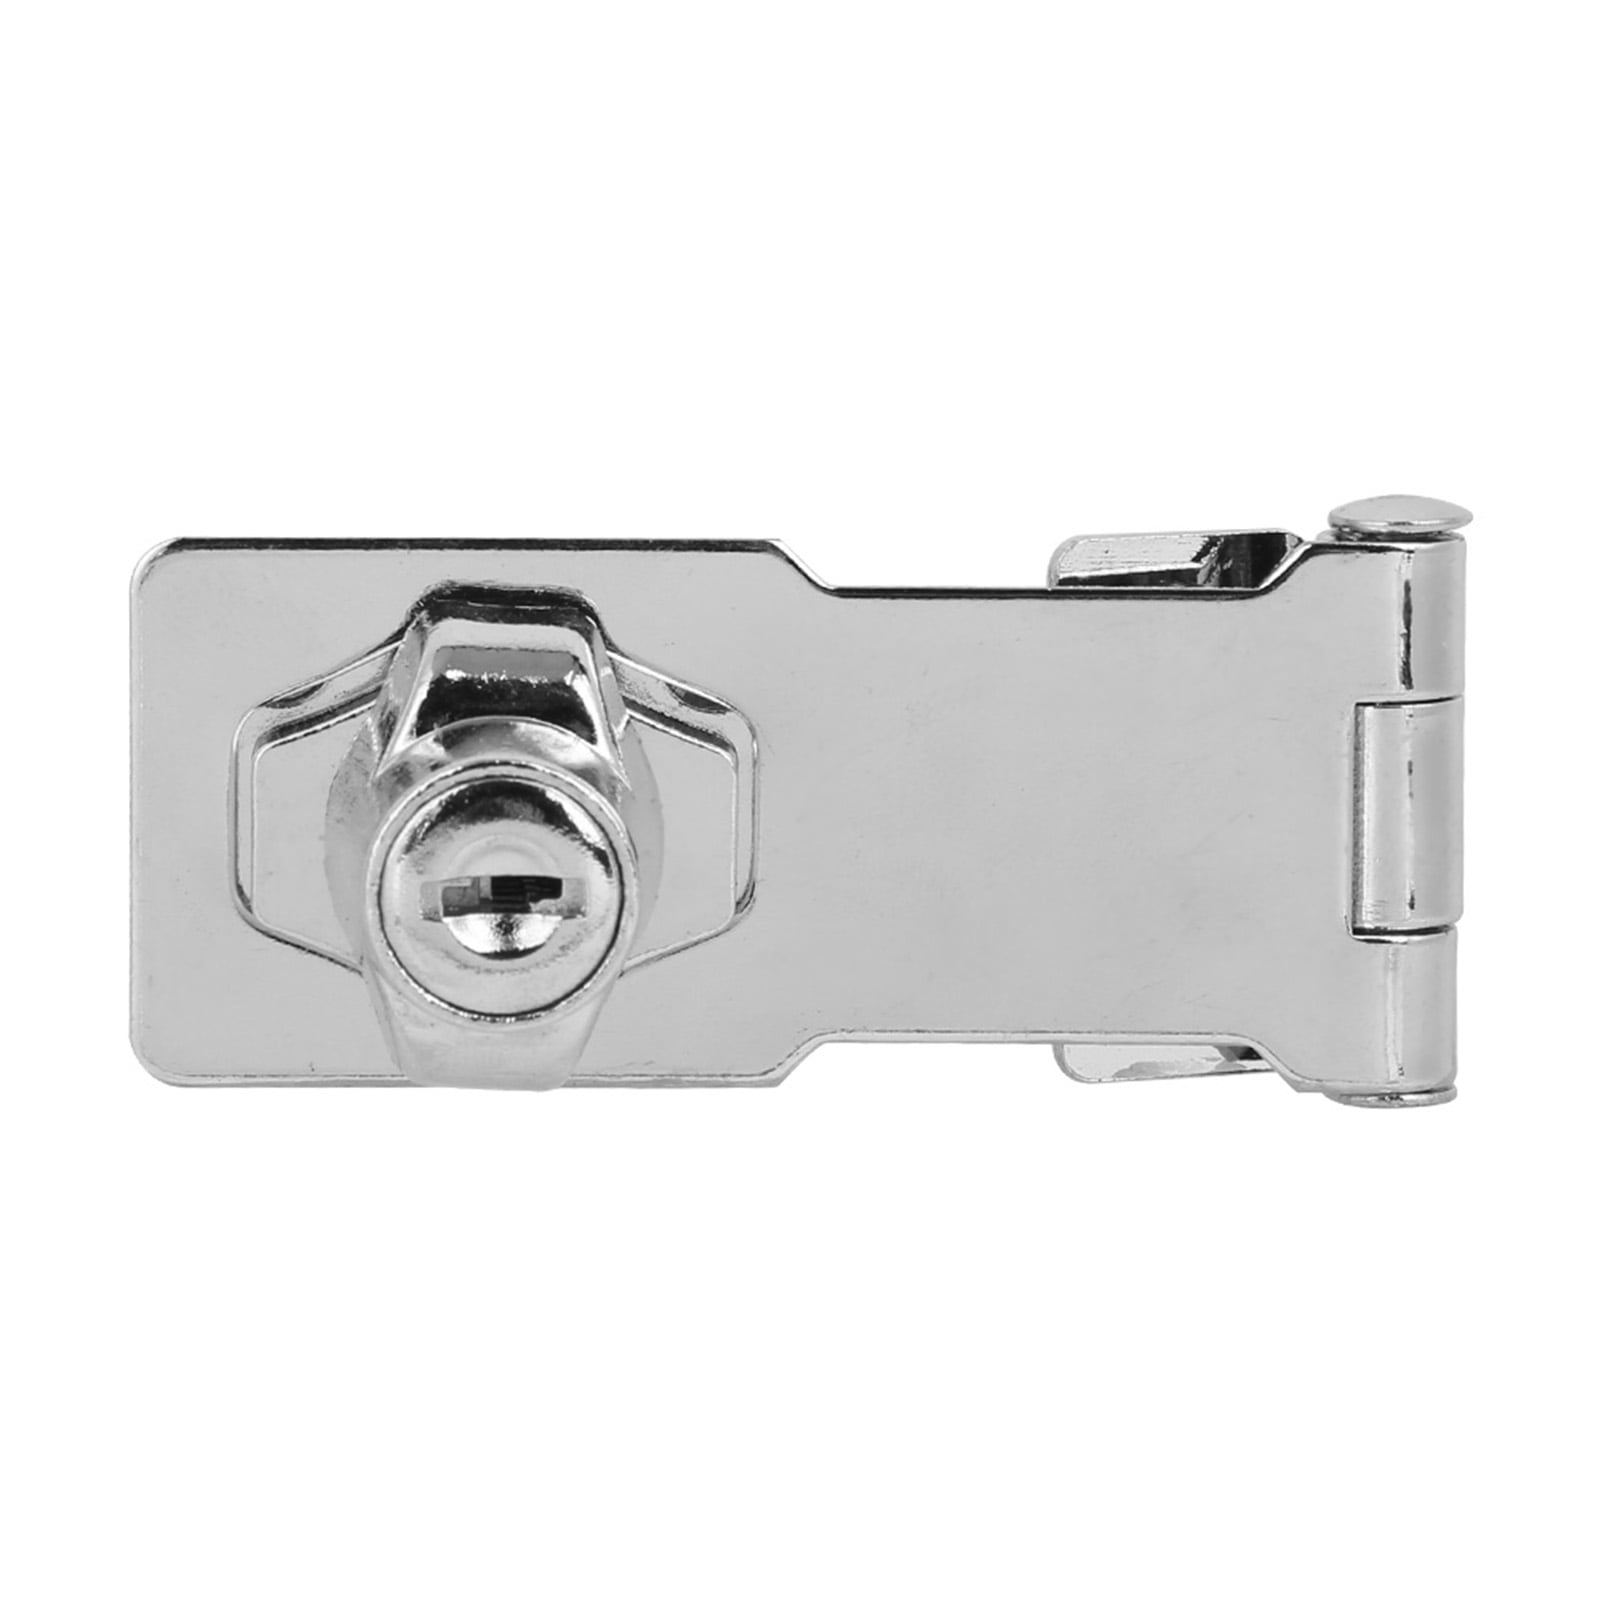 S/S Keyed Hasp Lock Twist Knob Keyed Locking Hasp for Small Doors Drawer Cabinet 